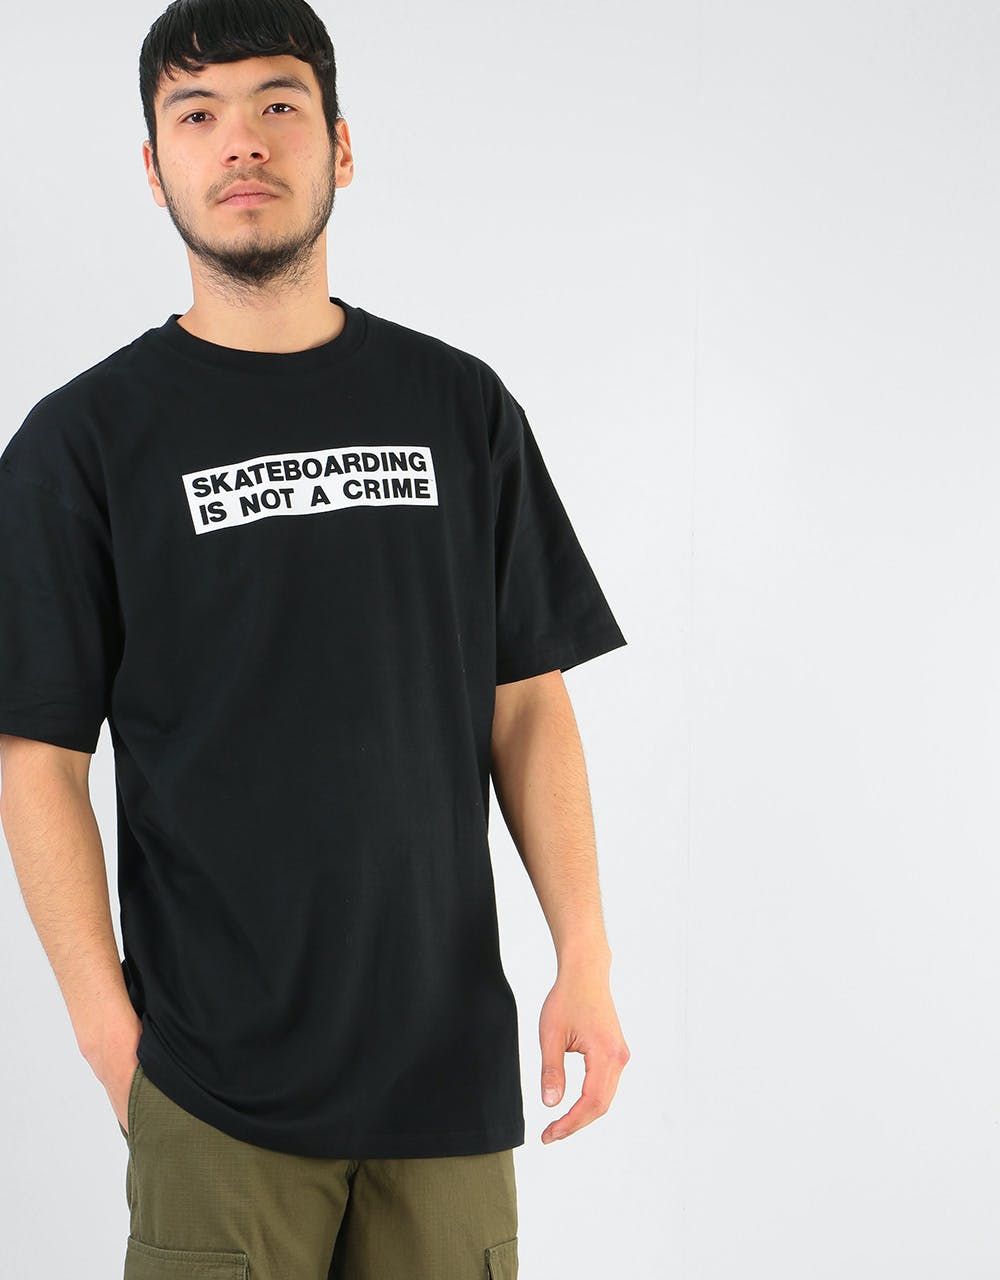 Santa Cruz Not a Crime T-Shirt  - Black